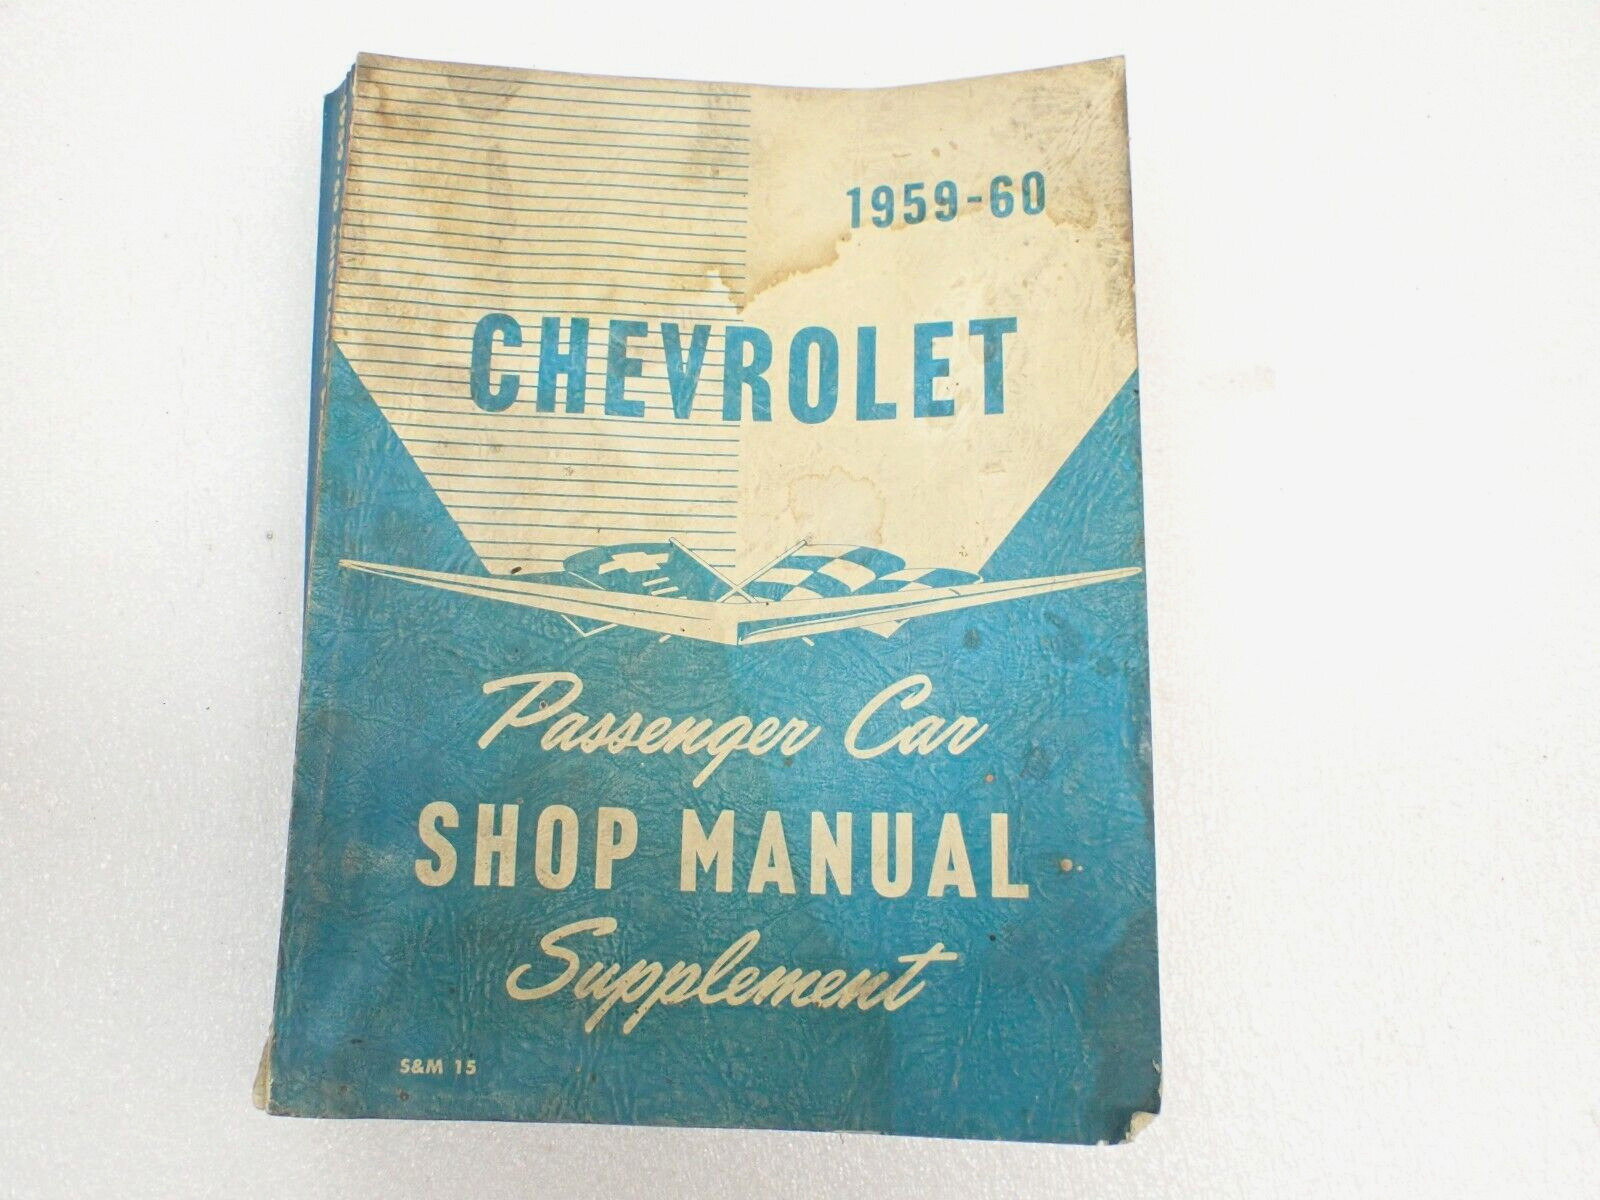 Original 1959 1960 Chevrolet Impala BelAir Biscayne GM Shop Manual Supplement 